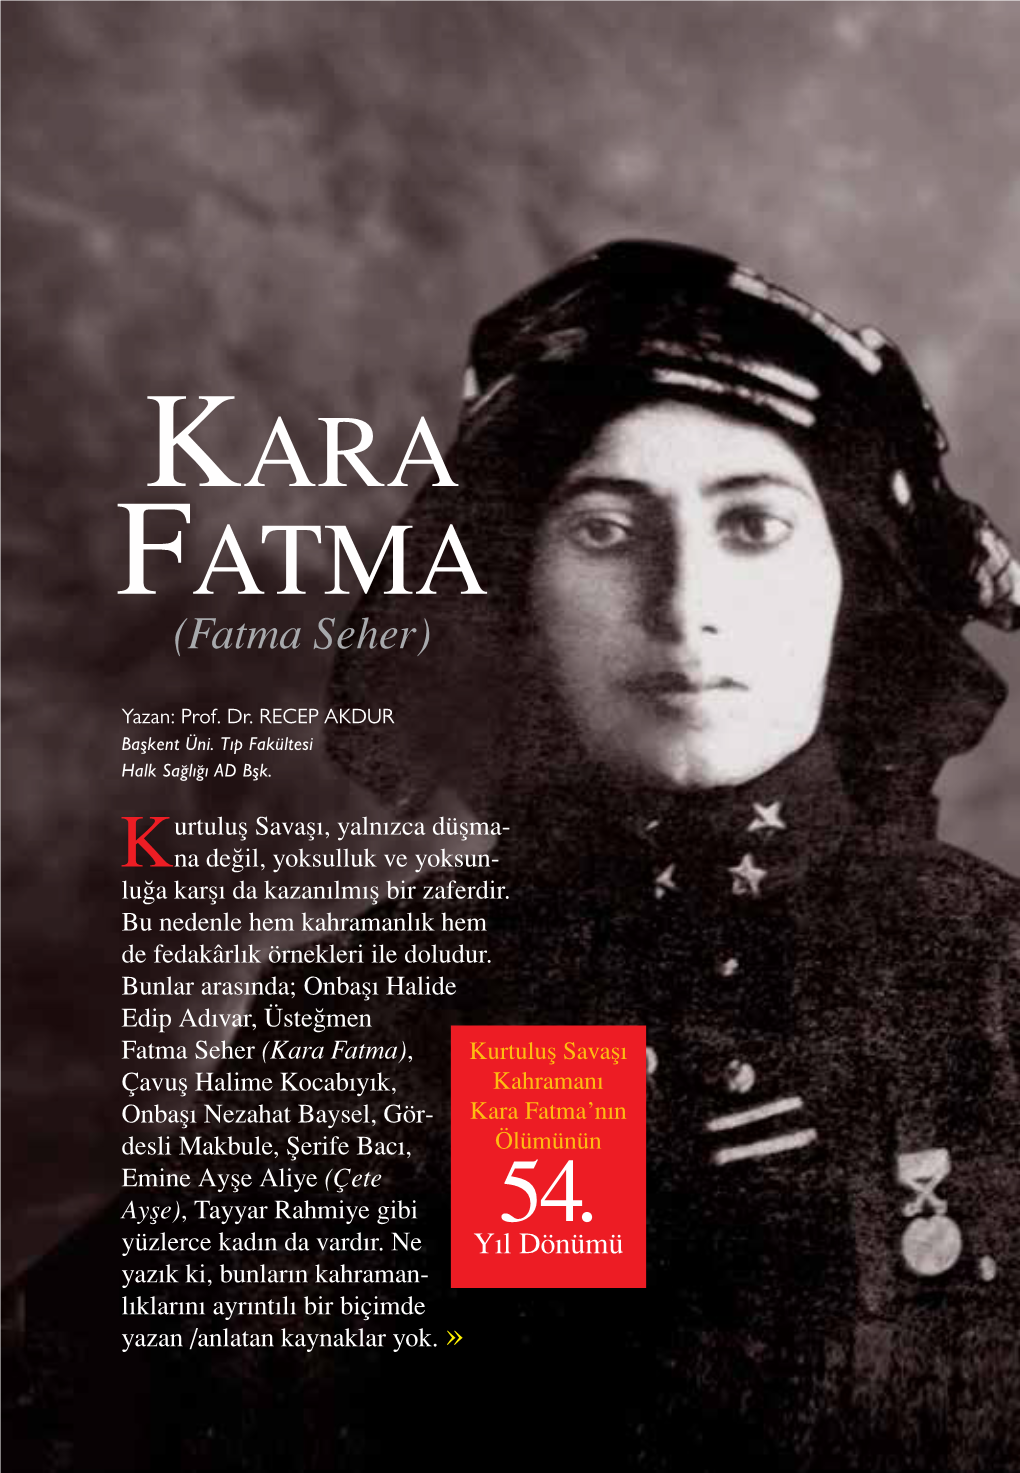 KARA FATMA (Fatma Seher)